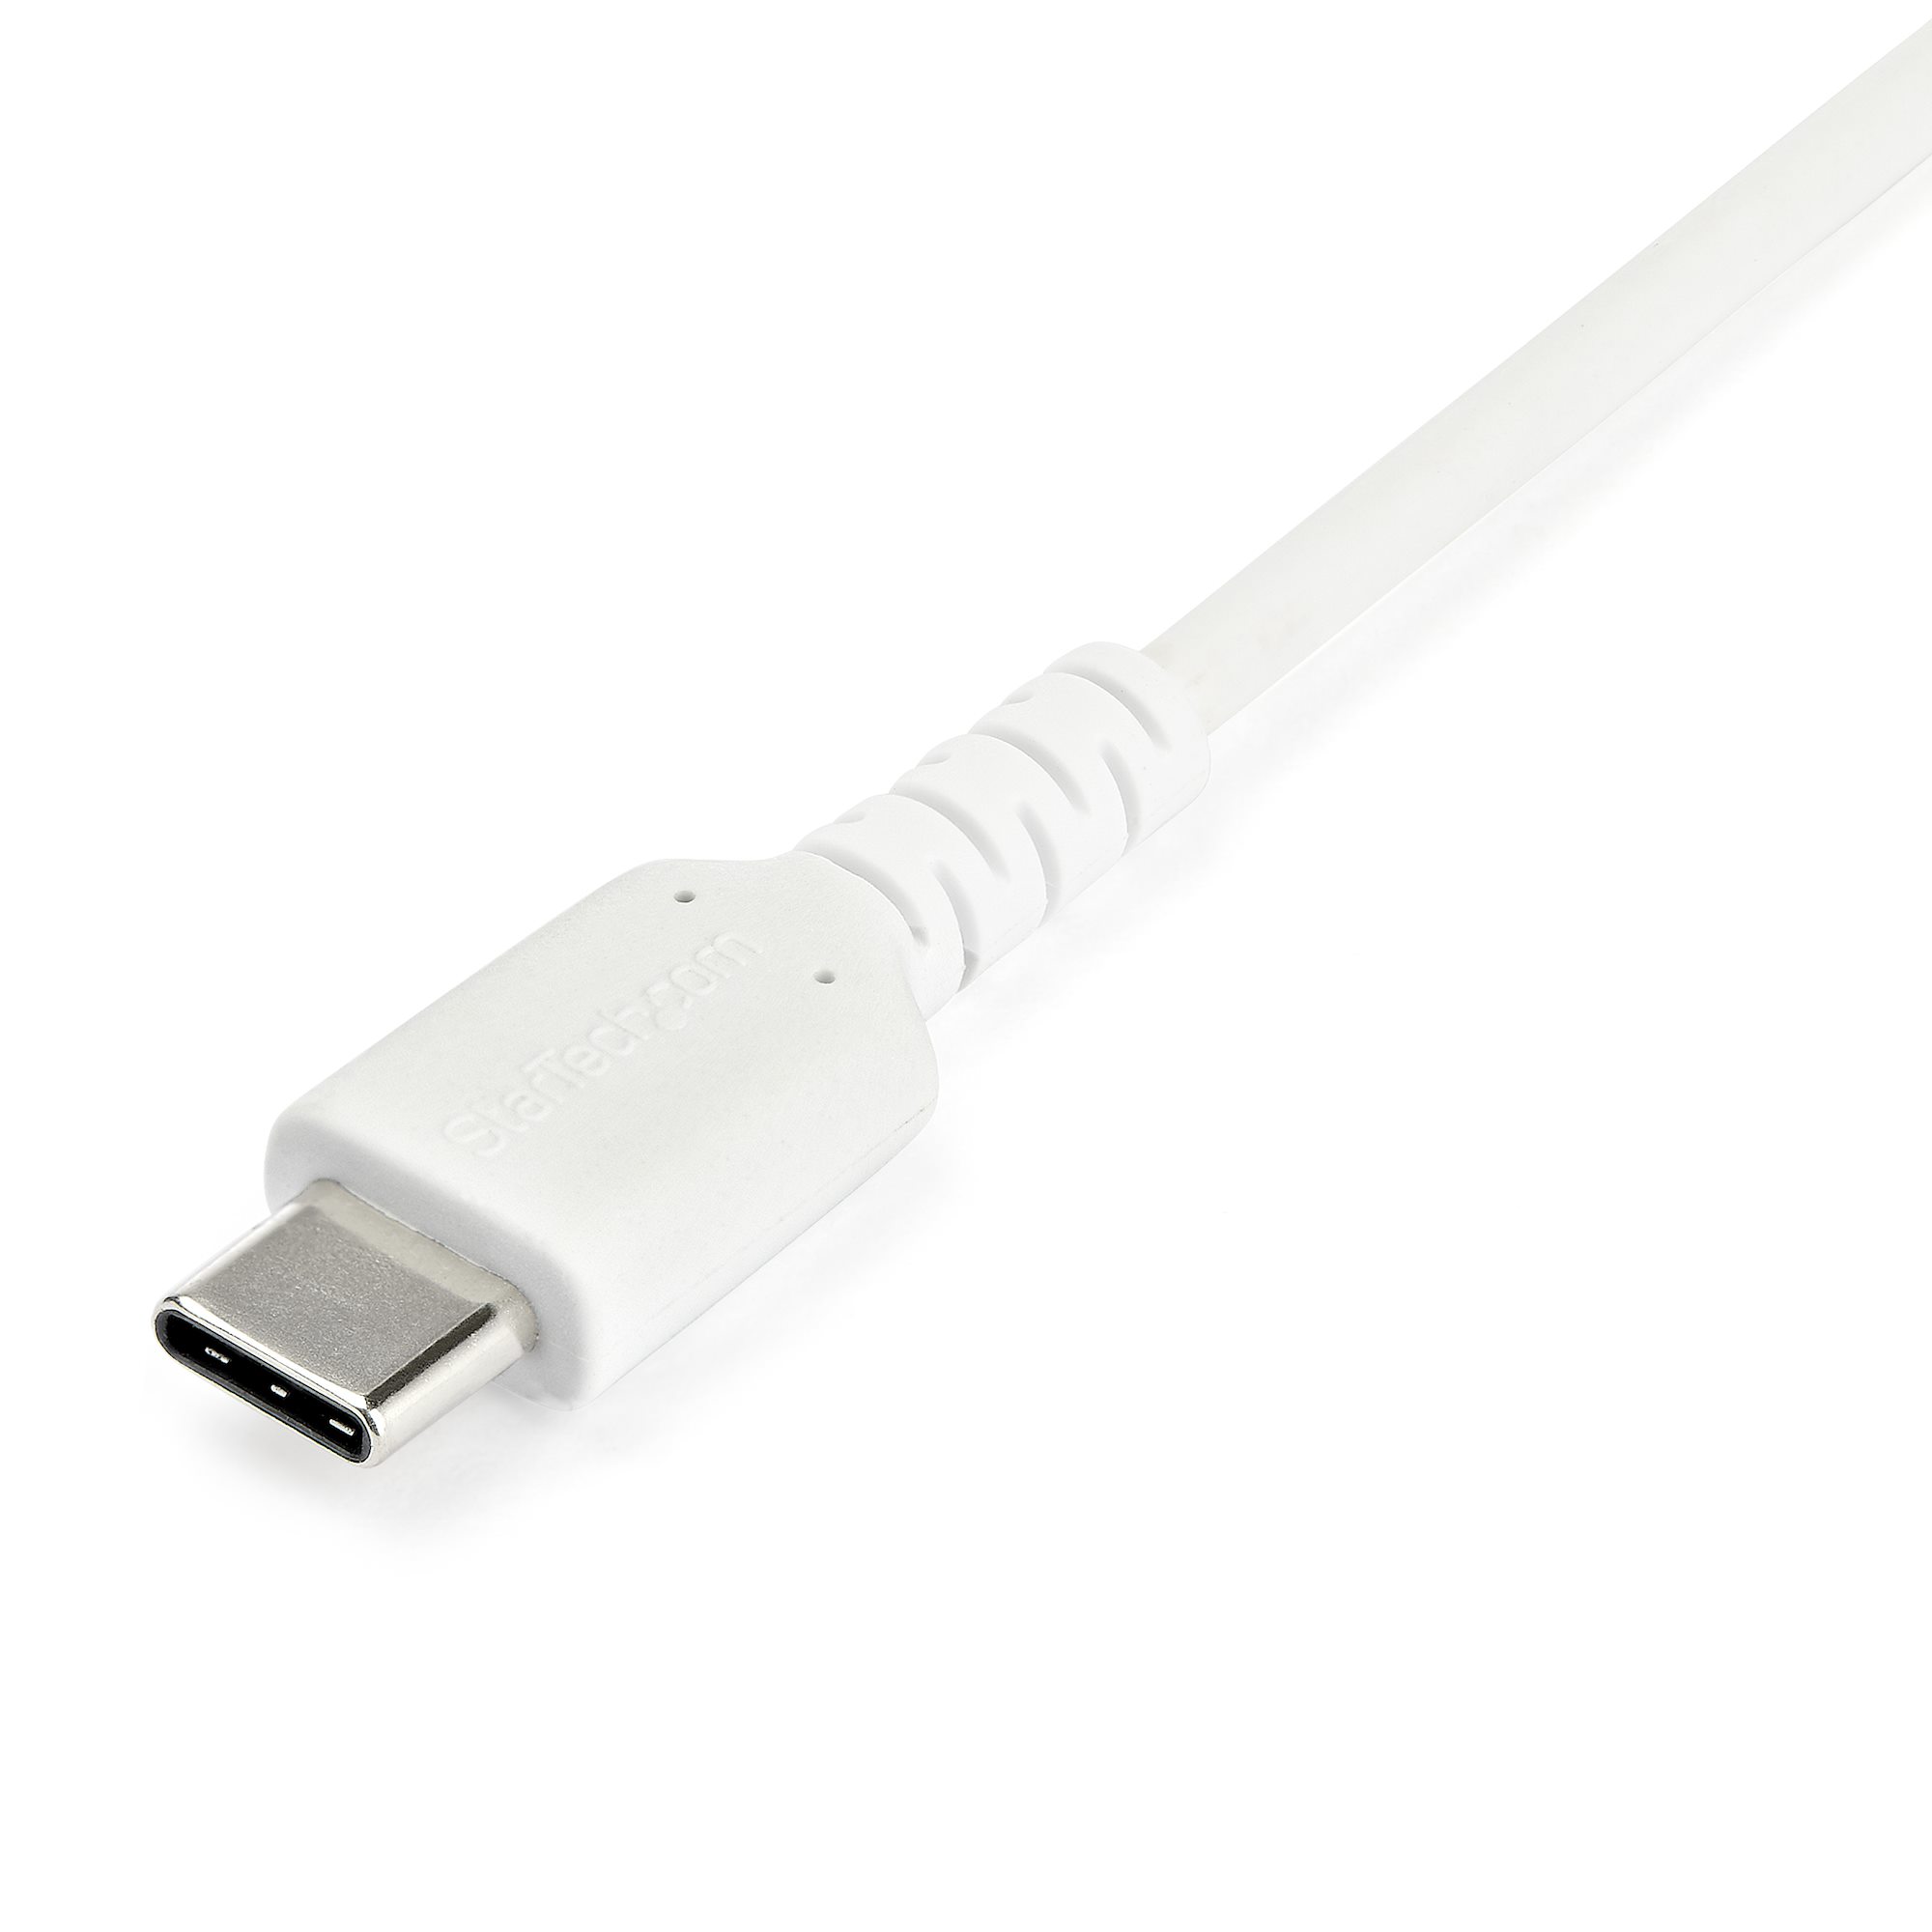  StarTech.com USB C to USB Cable - 6 ft / 2m - USB A to C - USB  2.0 Cable - USB Adapter Cable - USB Type C - USB-C Cable (USB2AC2M) :  Electronics